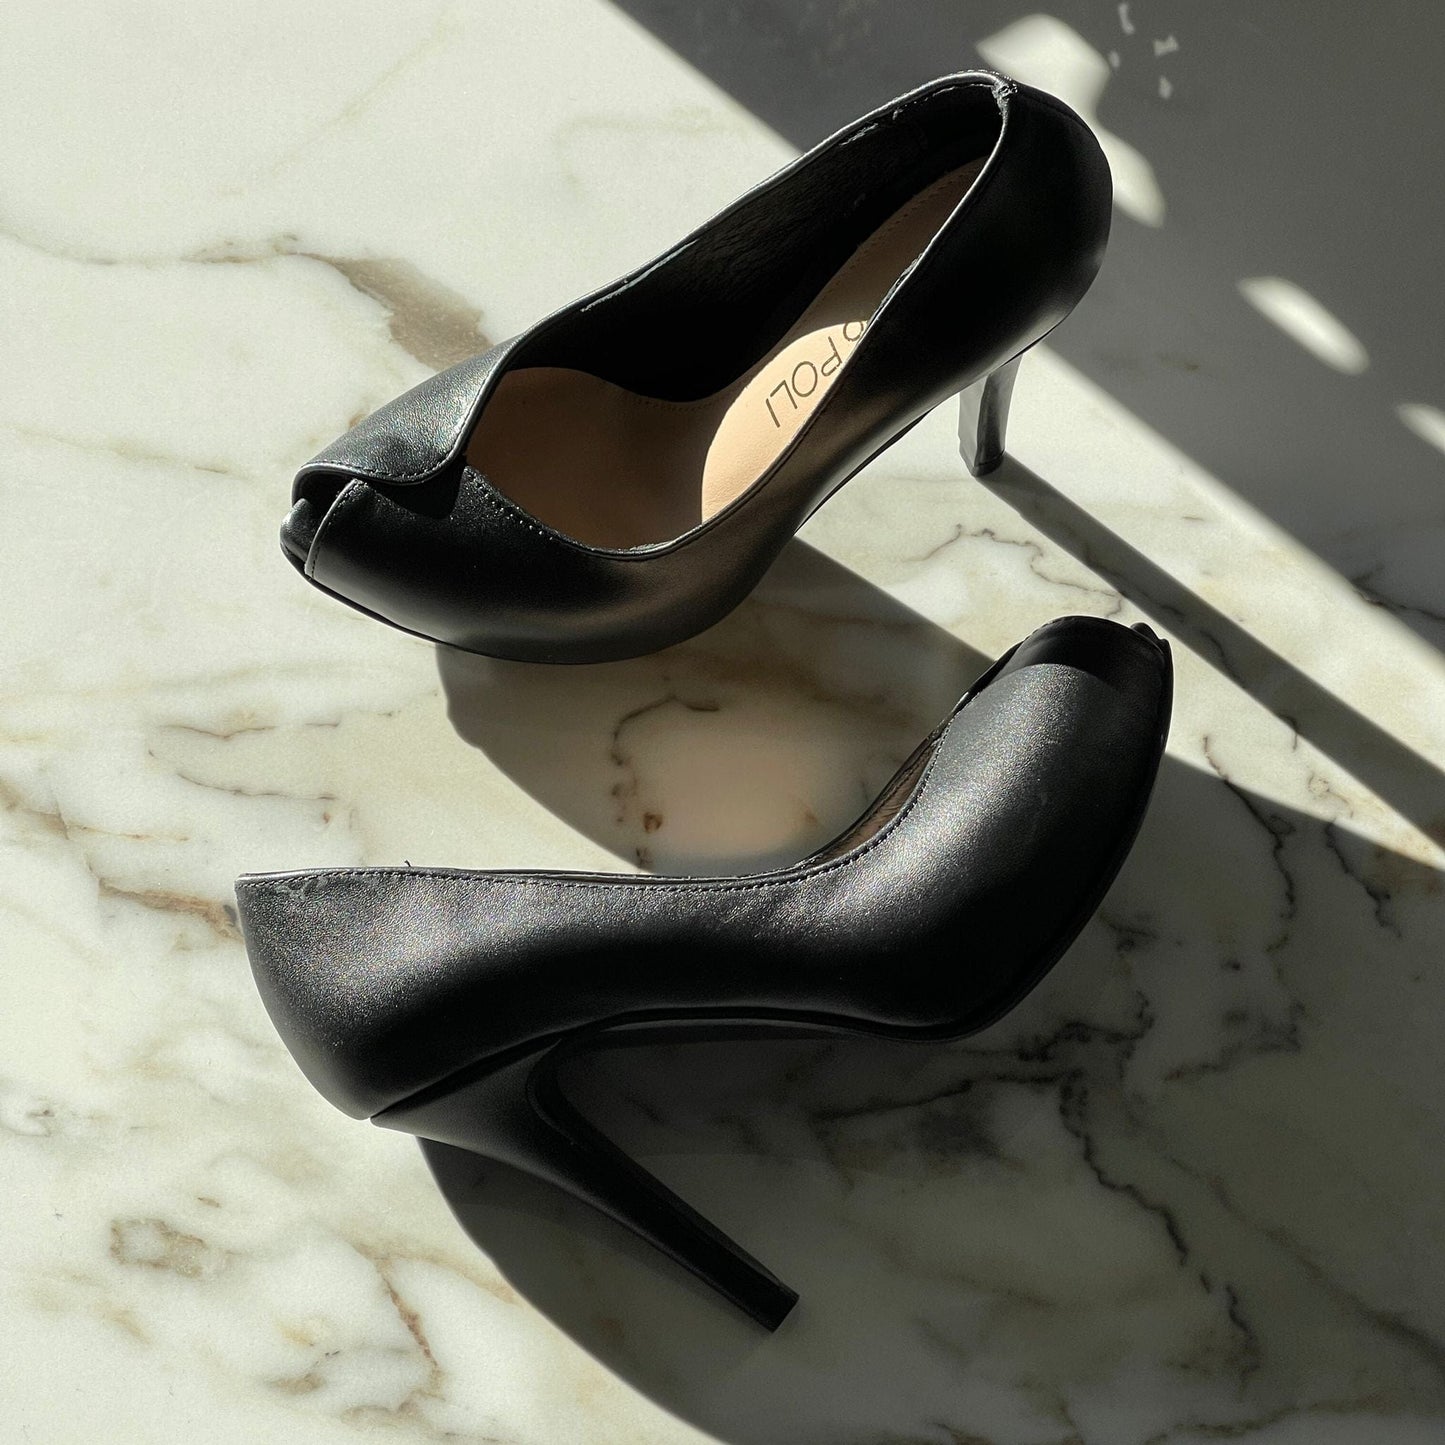 Black leather peep toe court shoes